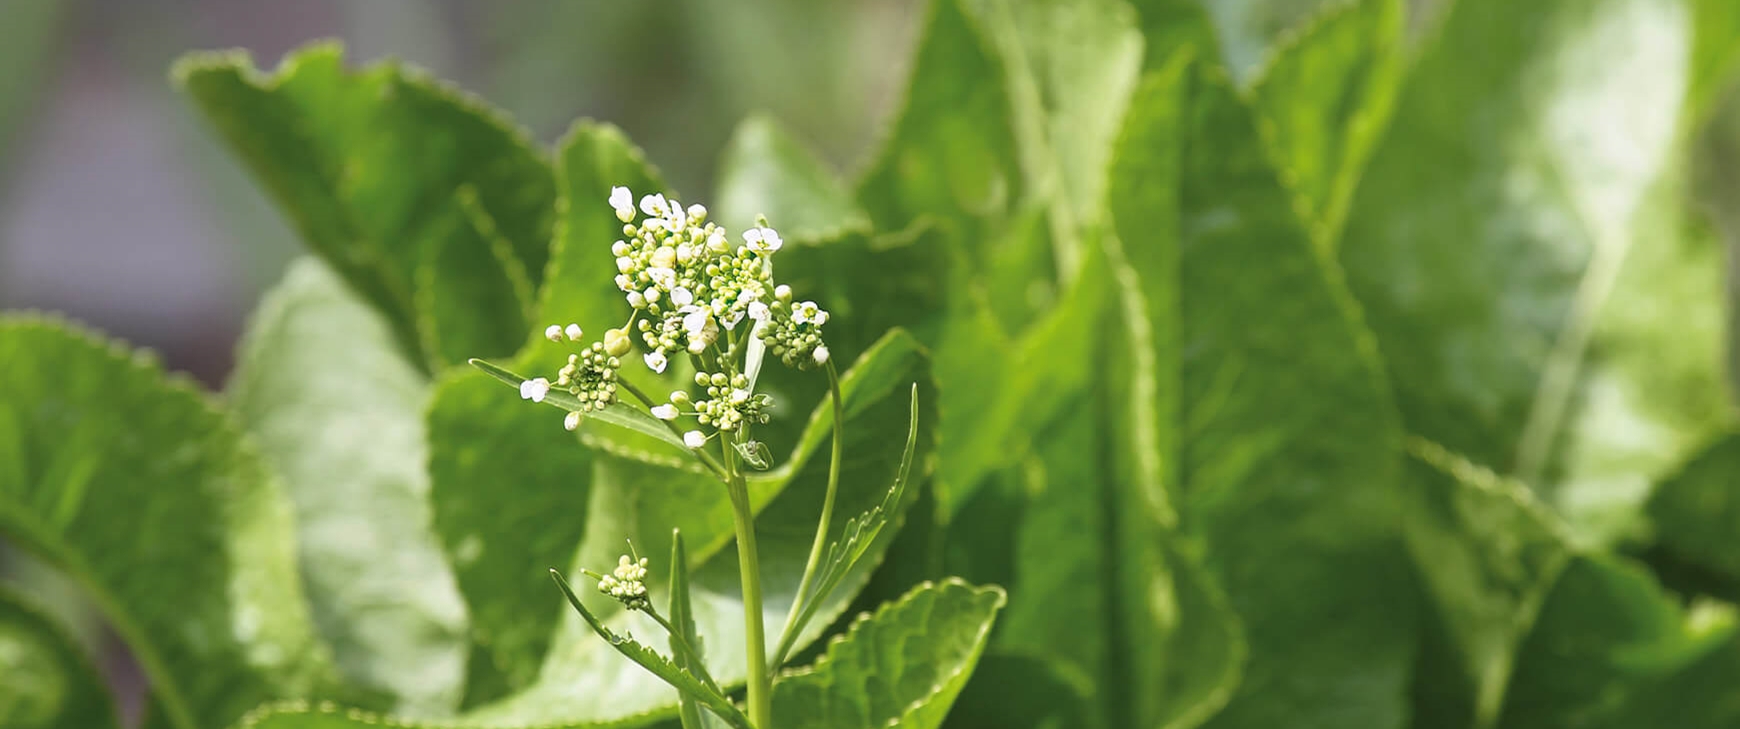 Raifort(Armoracia rusticana)